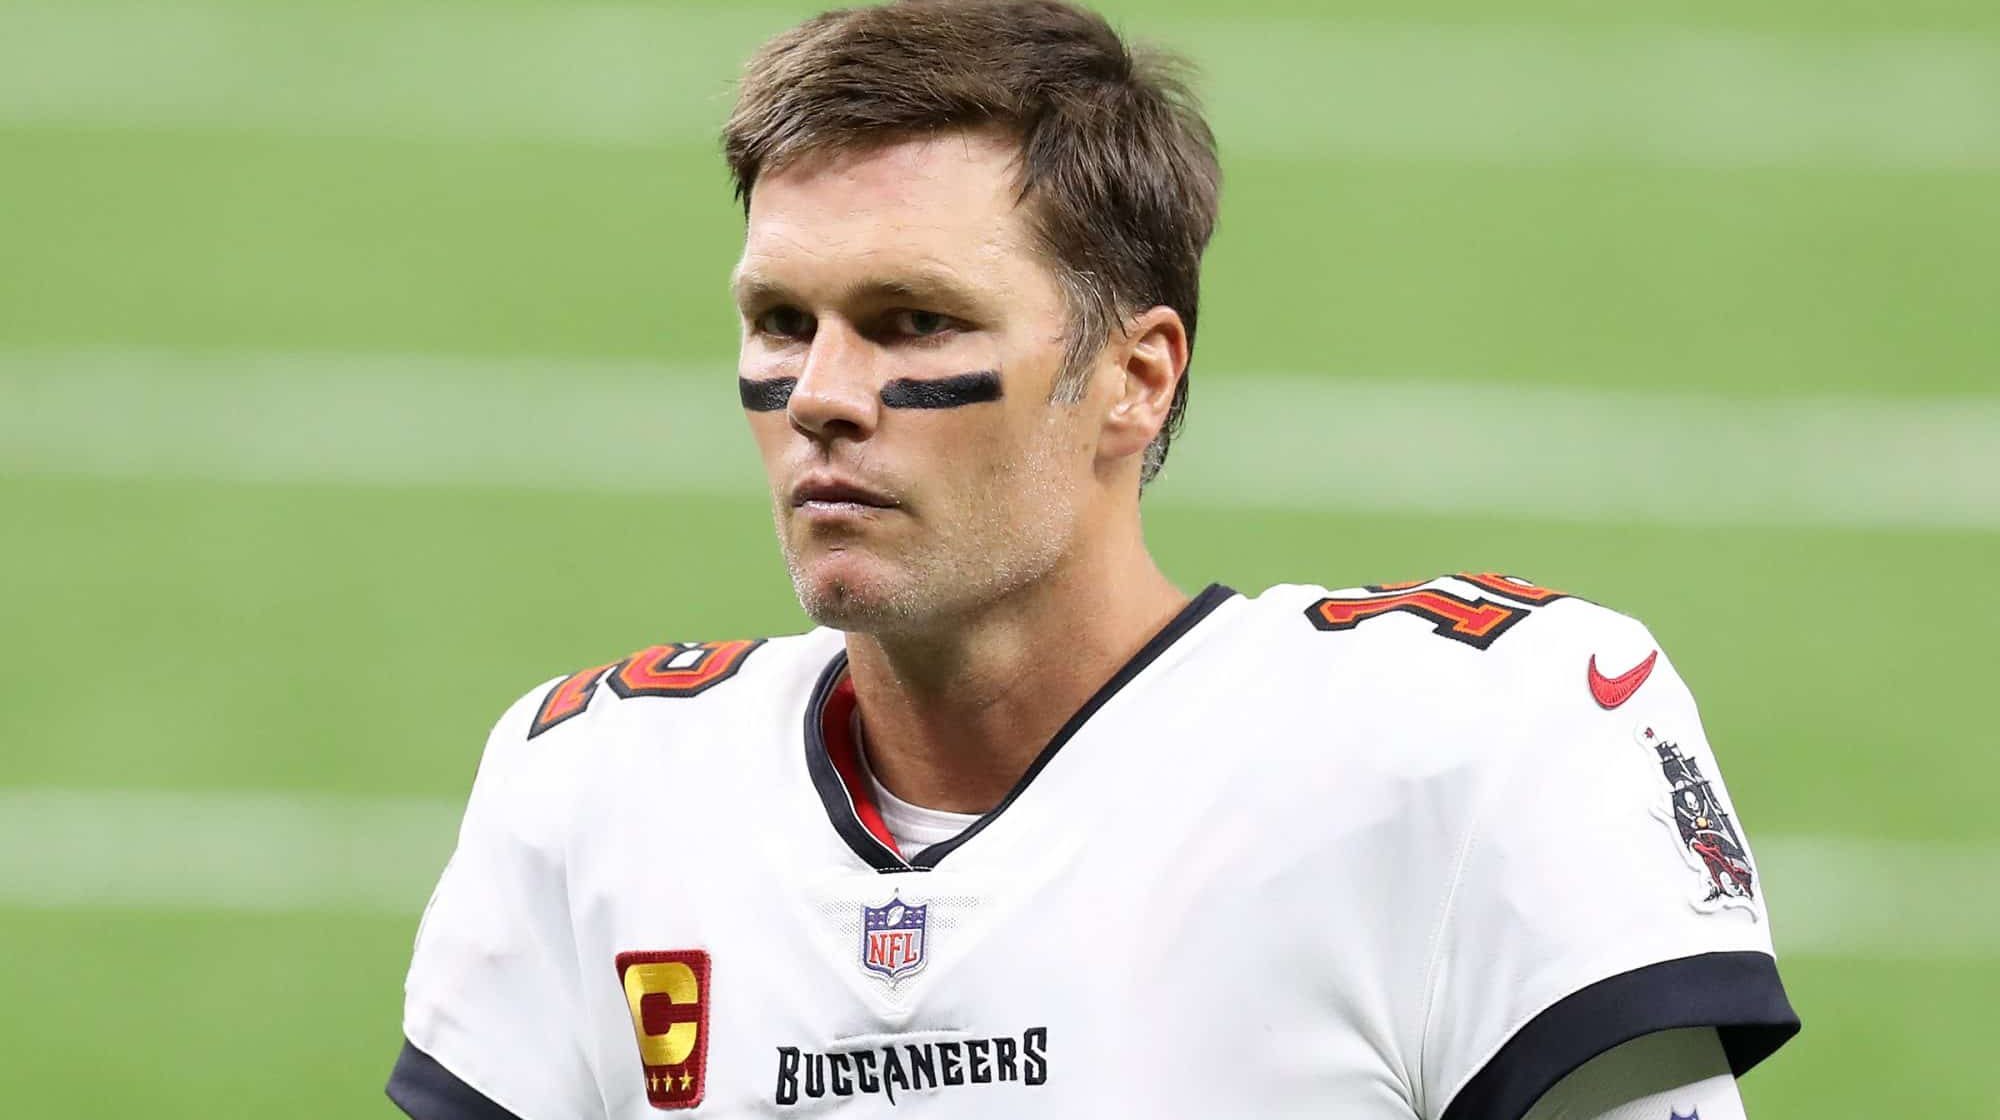 NFL Quarterback, Tom Brady, Could be into Bitcoin